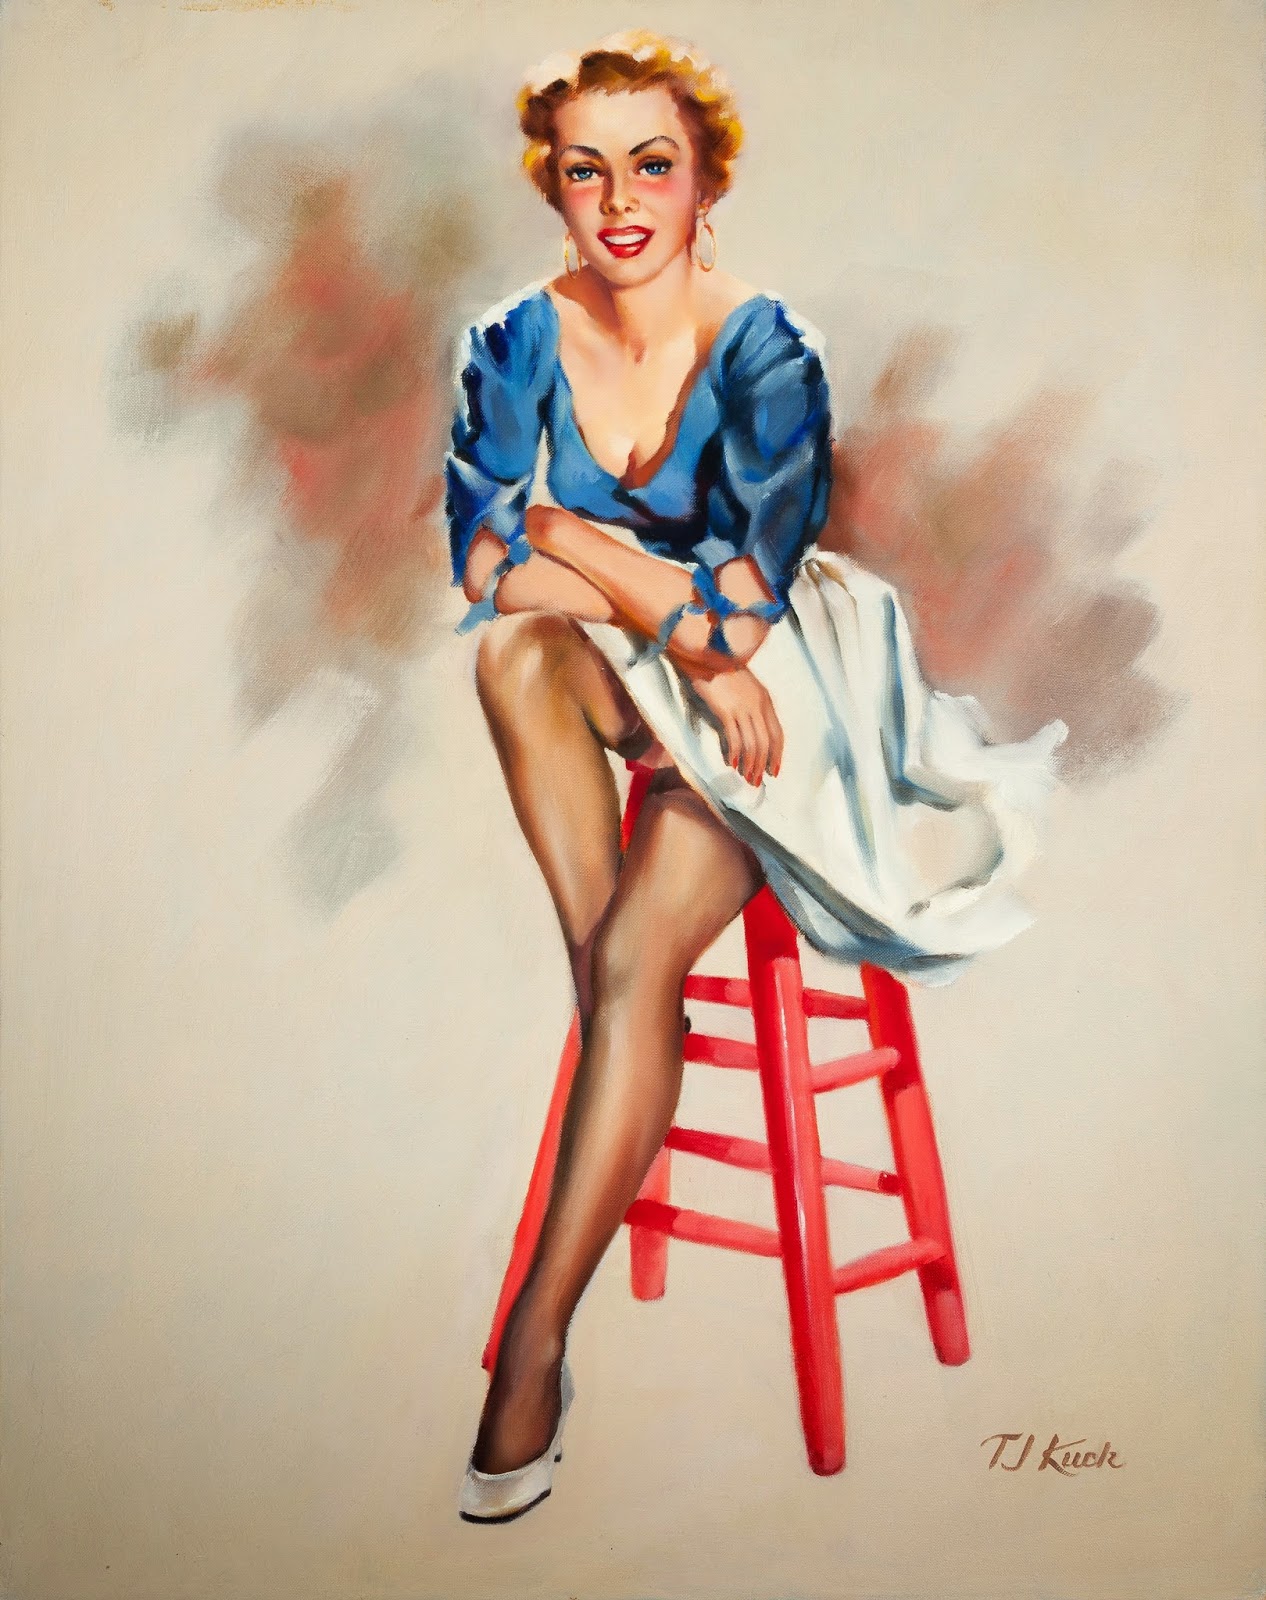 T.J. Kuck – Pin Up and Cartoon Girls Art | Vintage and Modern Artworks